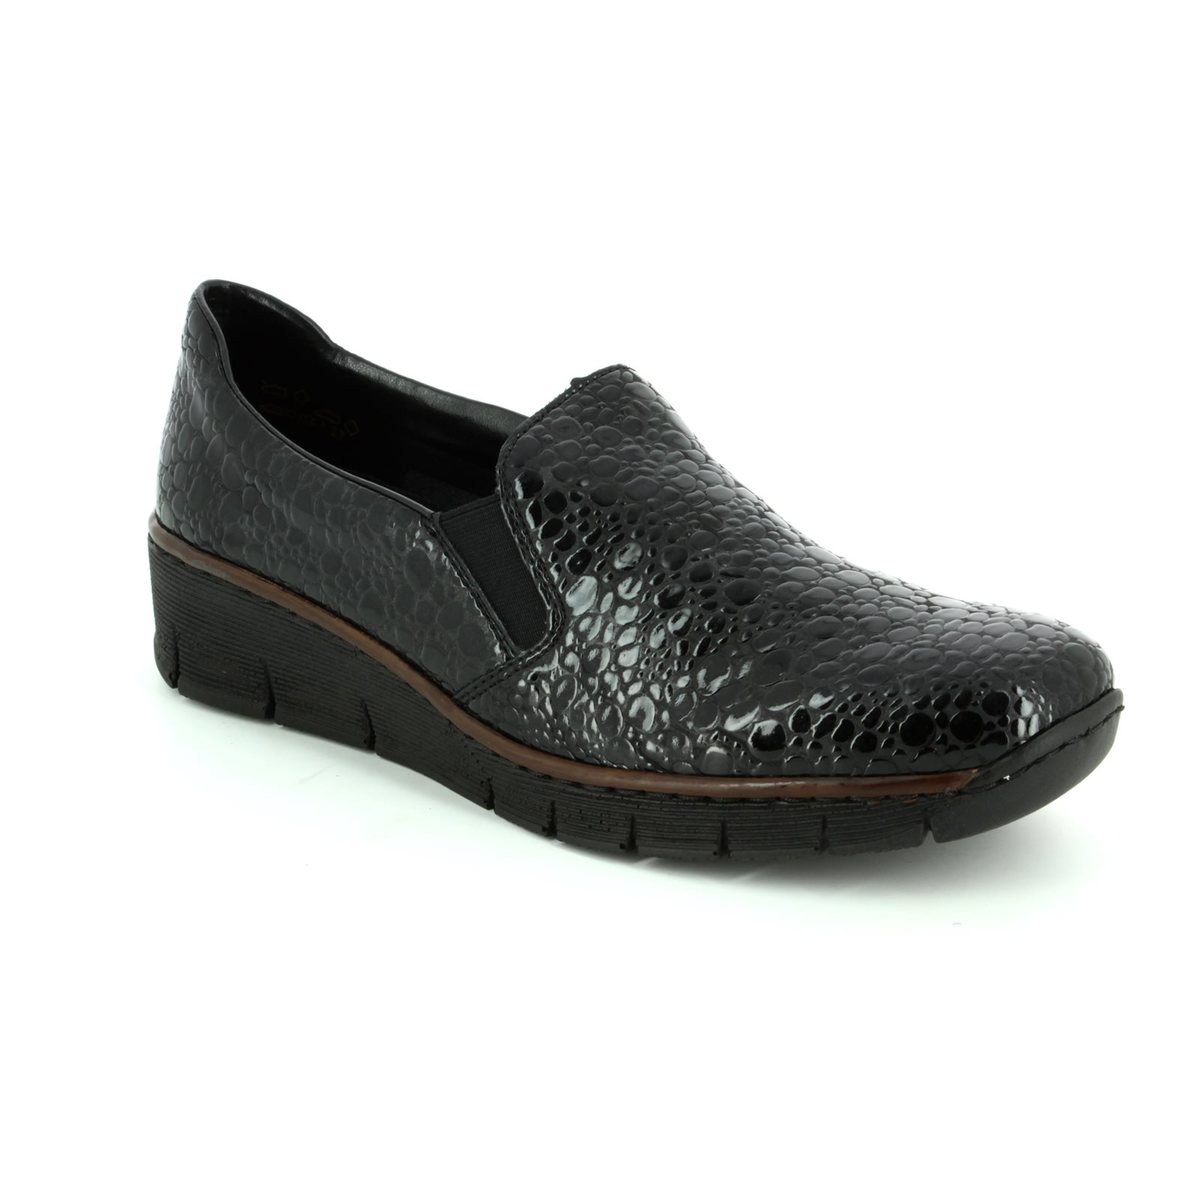 Rieker Bocciago Black Croc Womens Comfort Slip On Shoes 53766-45 In Size 39 In Plain Black Croc Effect